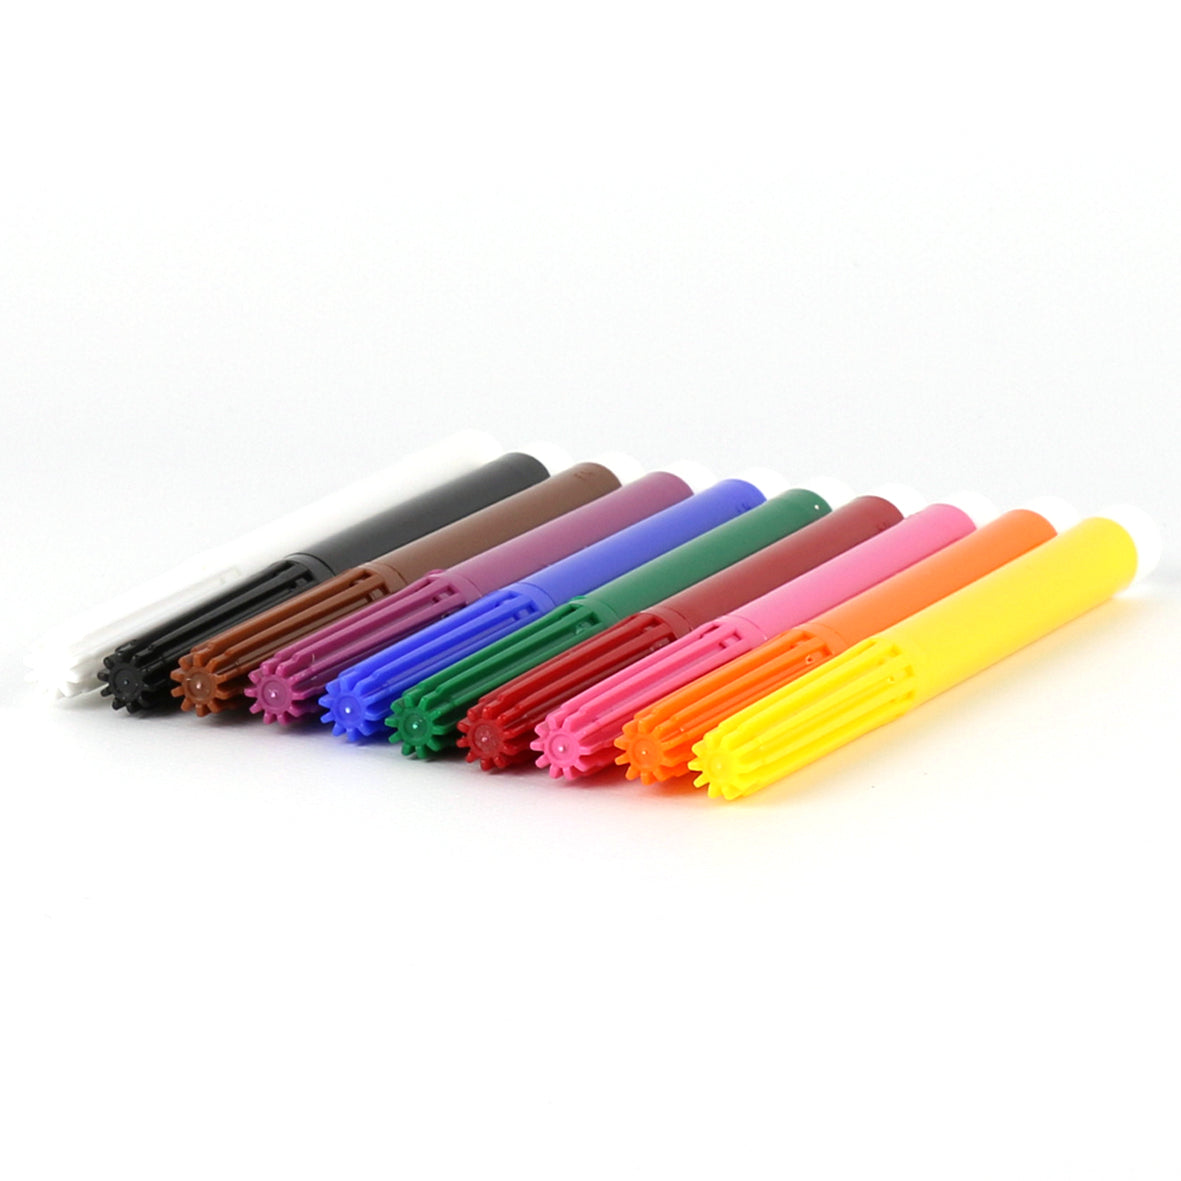 Fiber pen 9+1, incl. eraser pen - 9 colors - ÖKO-TEST "very good"